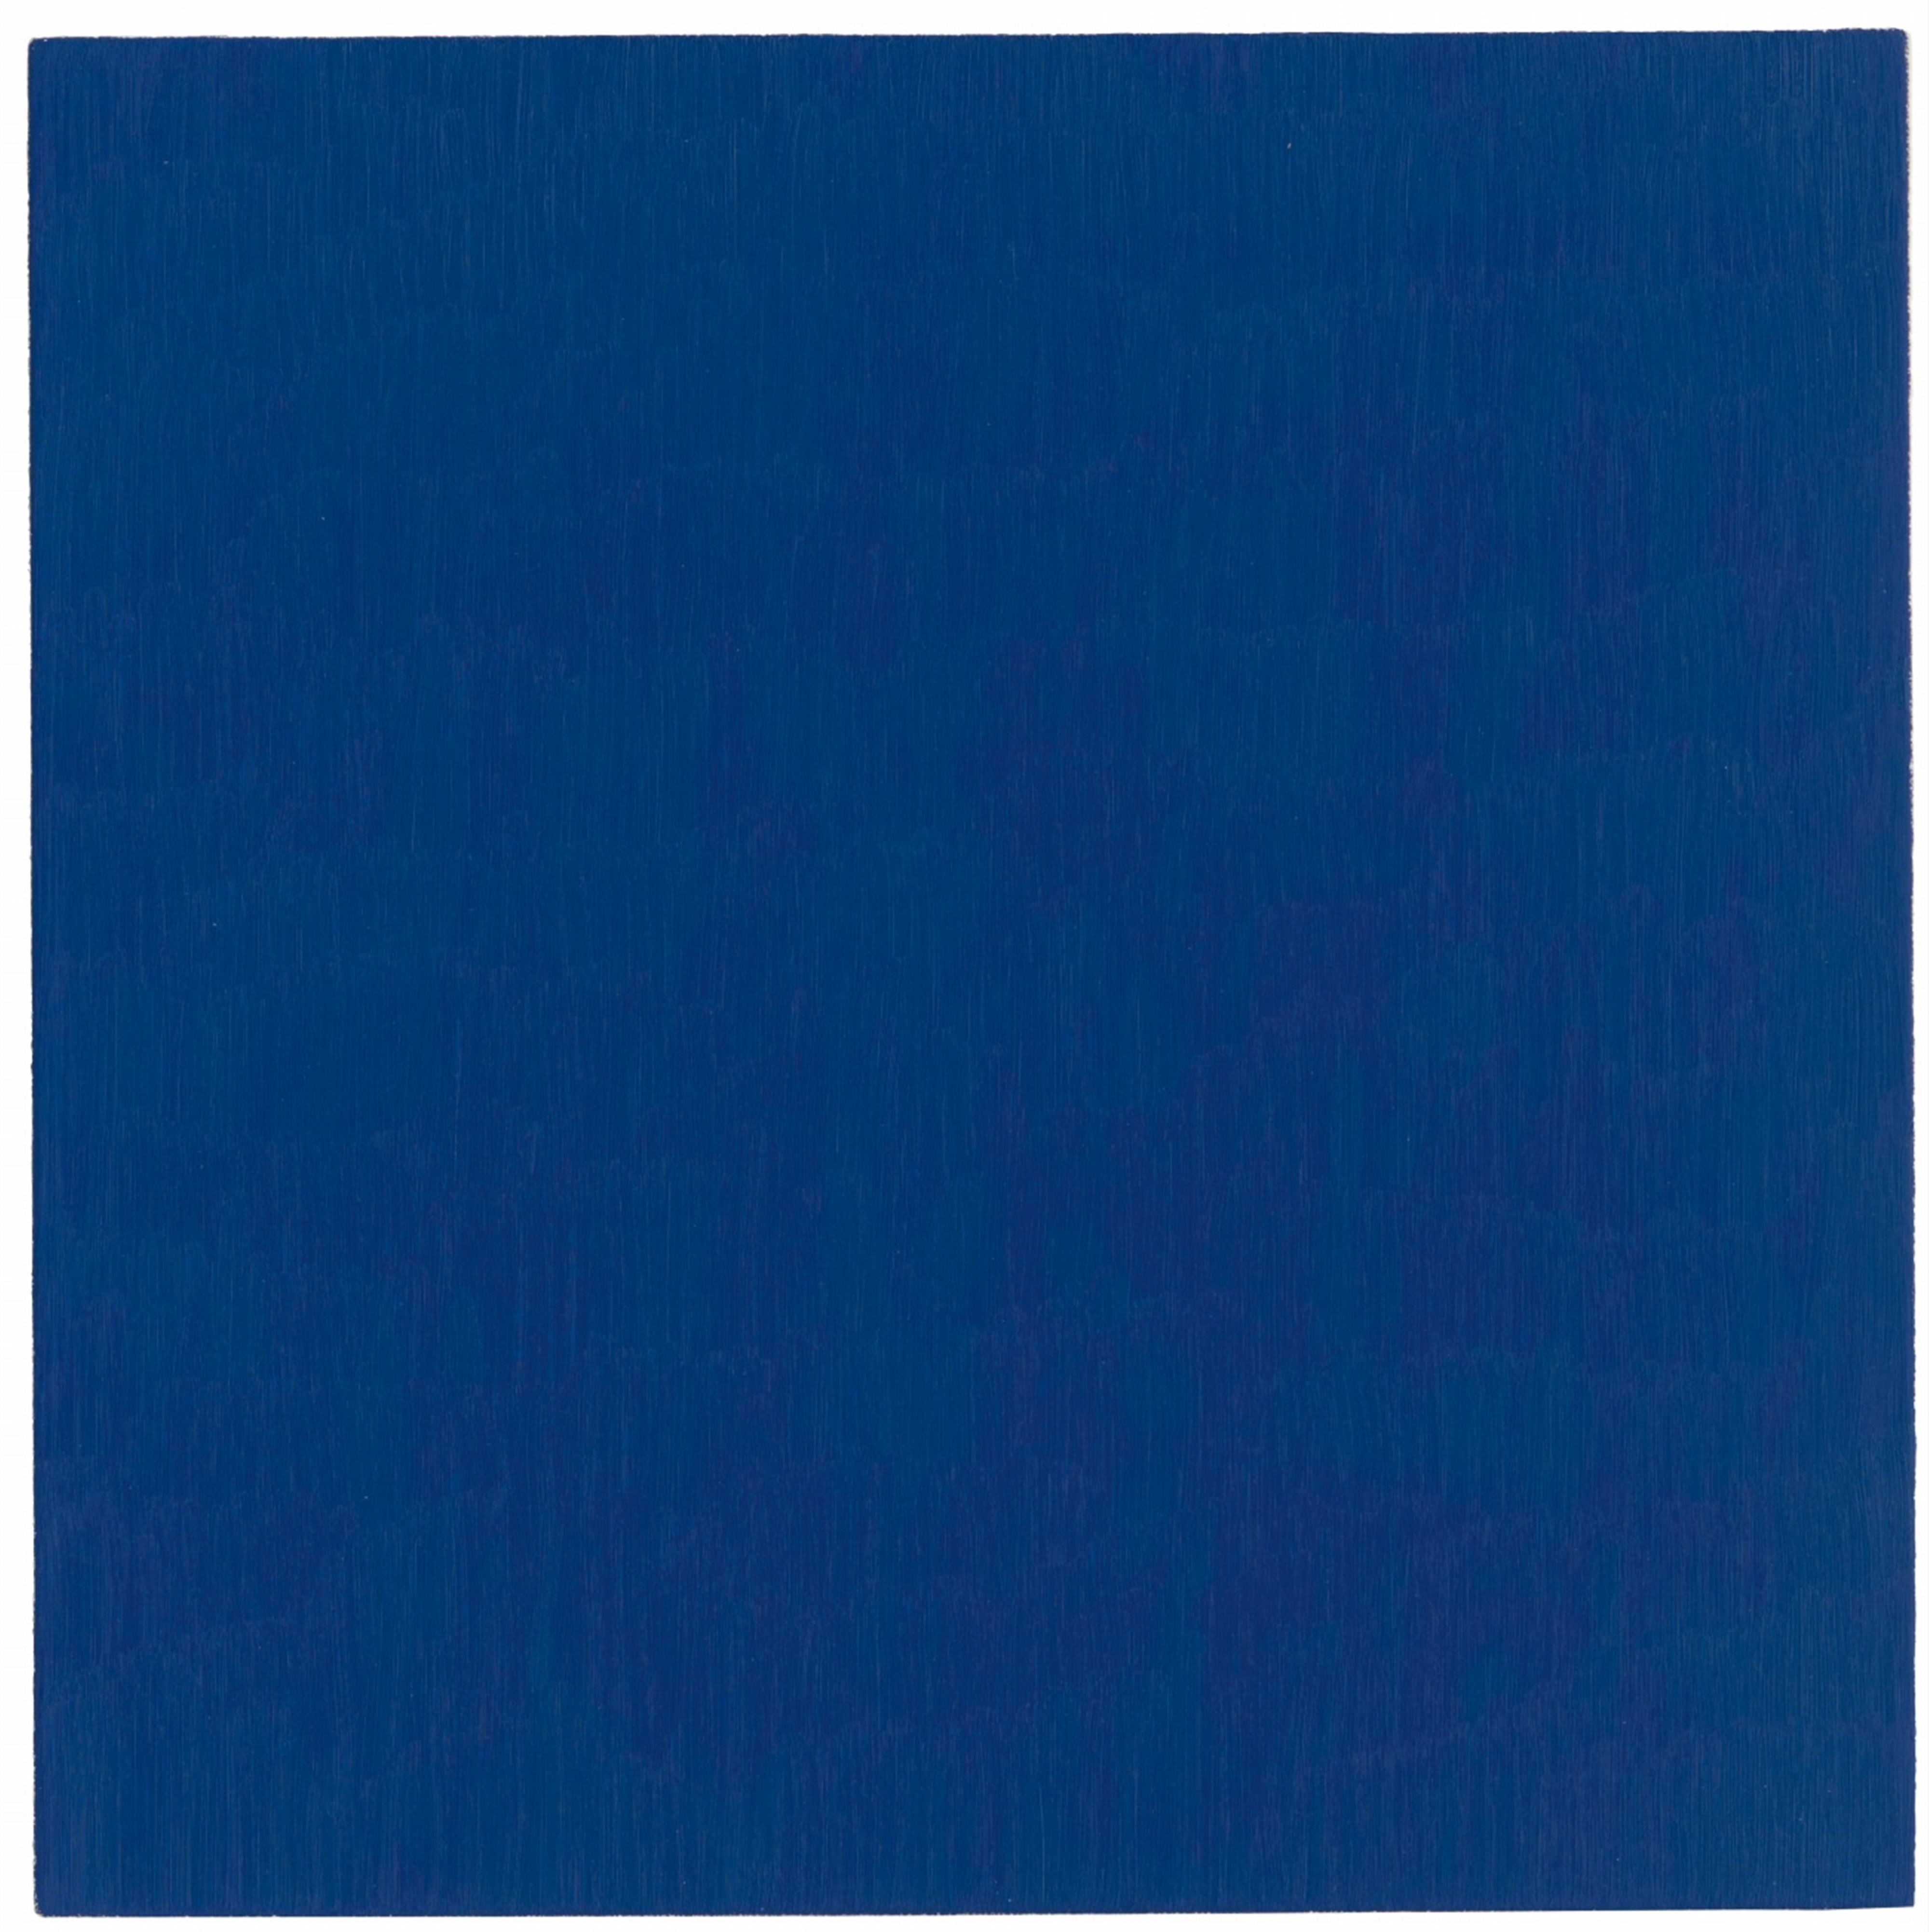 Marcia Hafif - HELIOGEN Blue - image-1